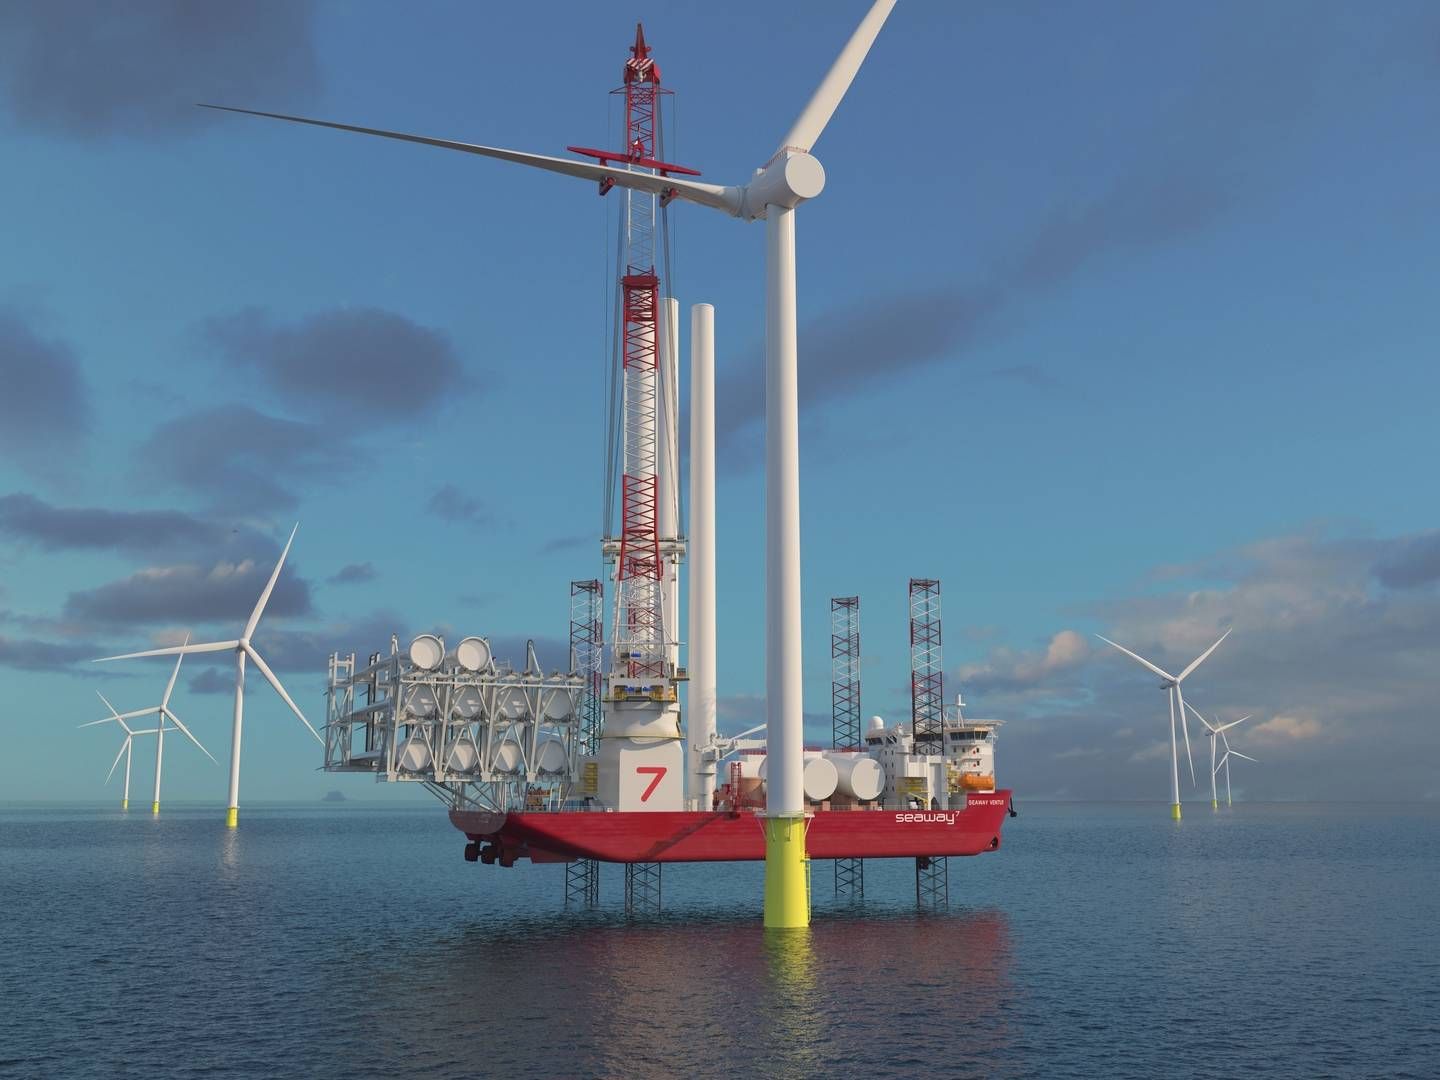 Seaway Ventus, a wind turbine installation vessel set to join the fleet in 2023. | Photo: Seaway 7